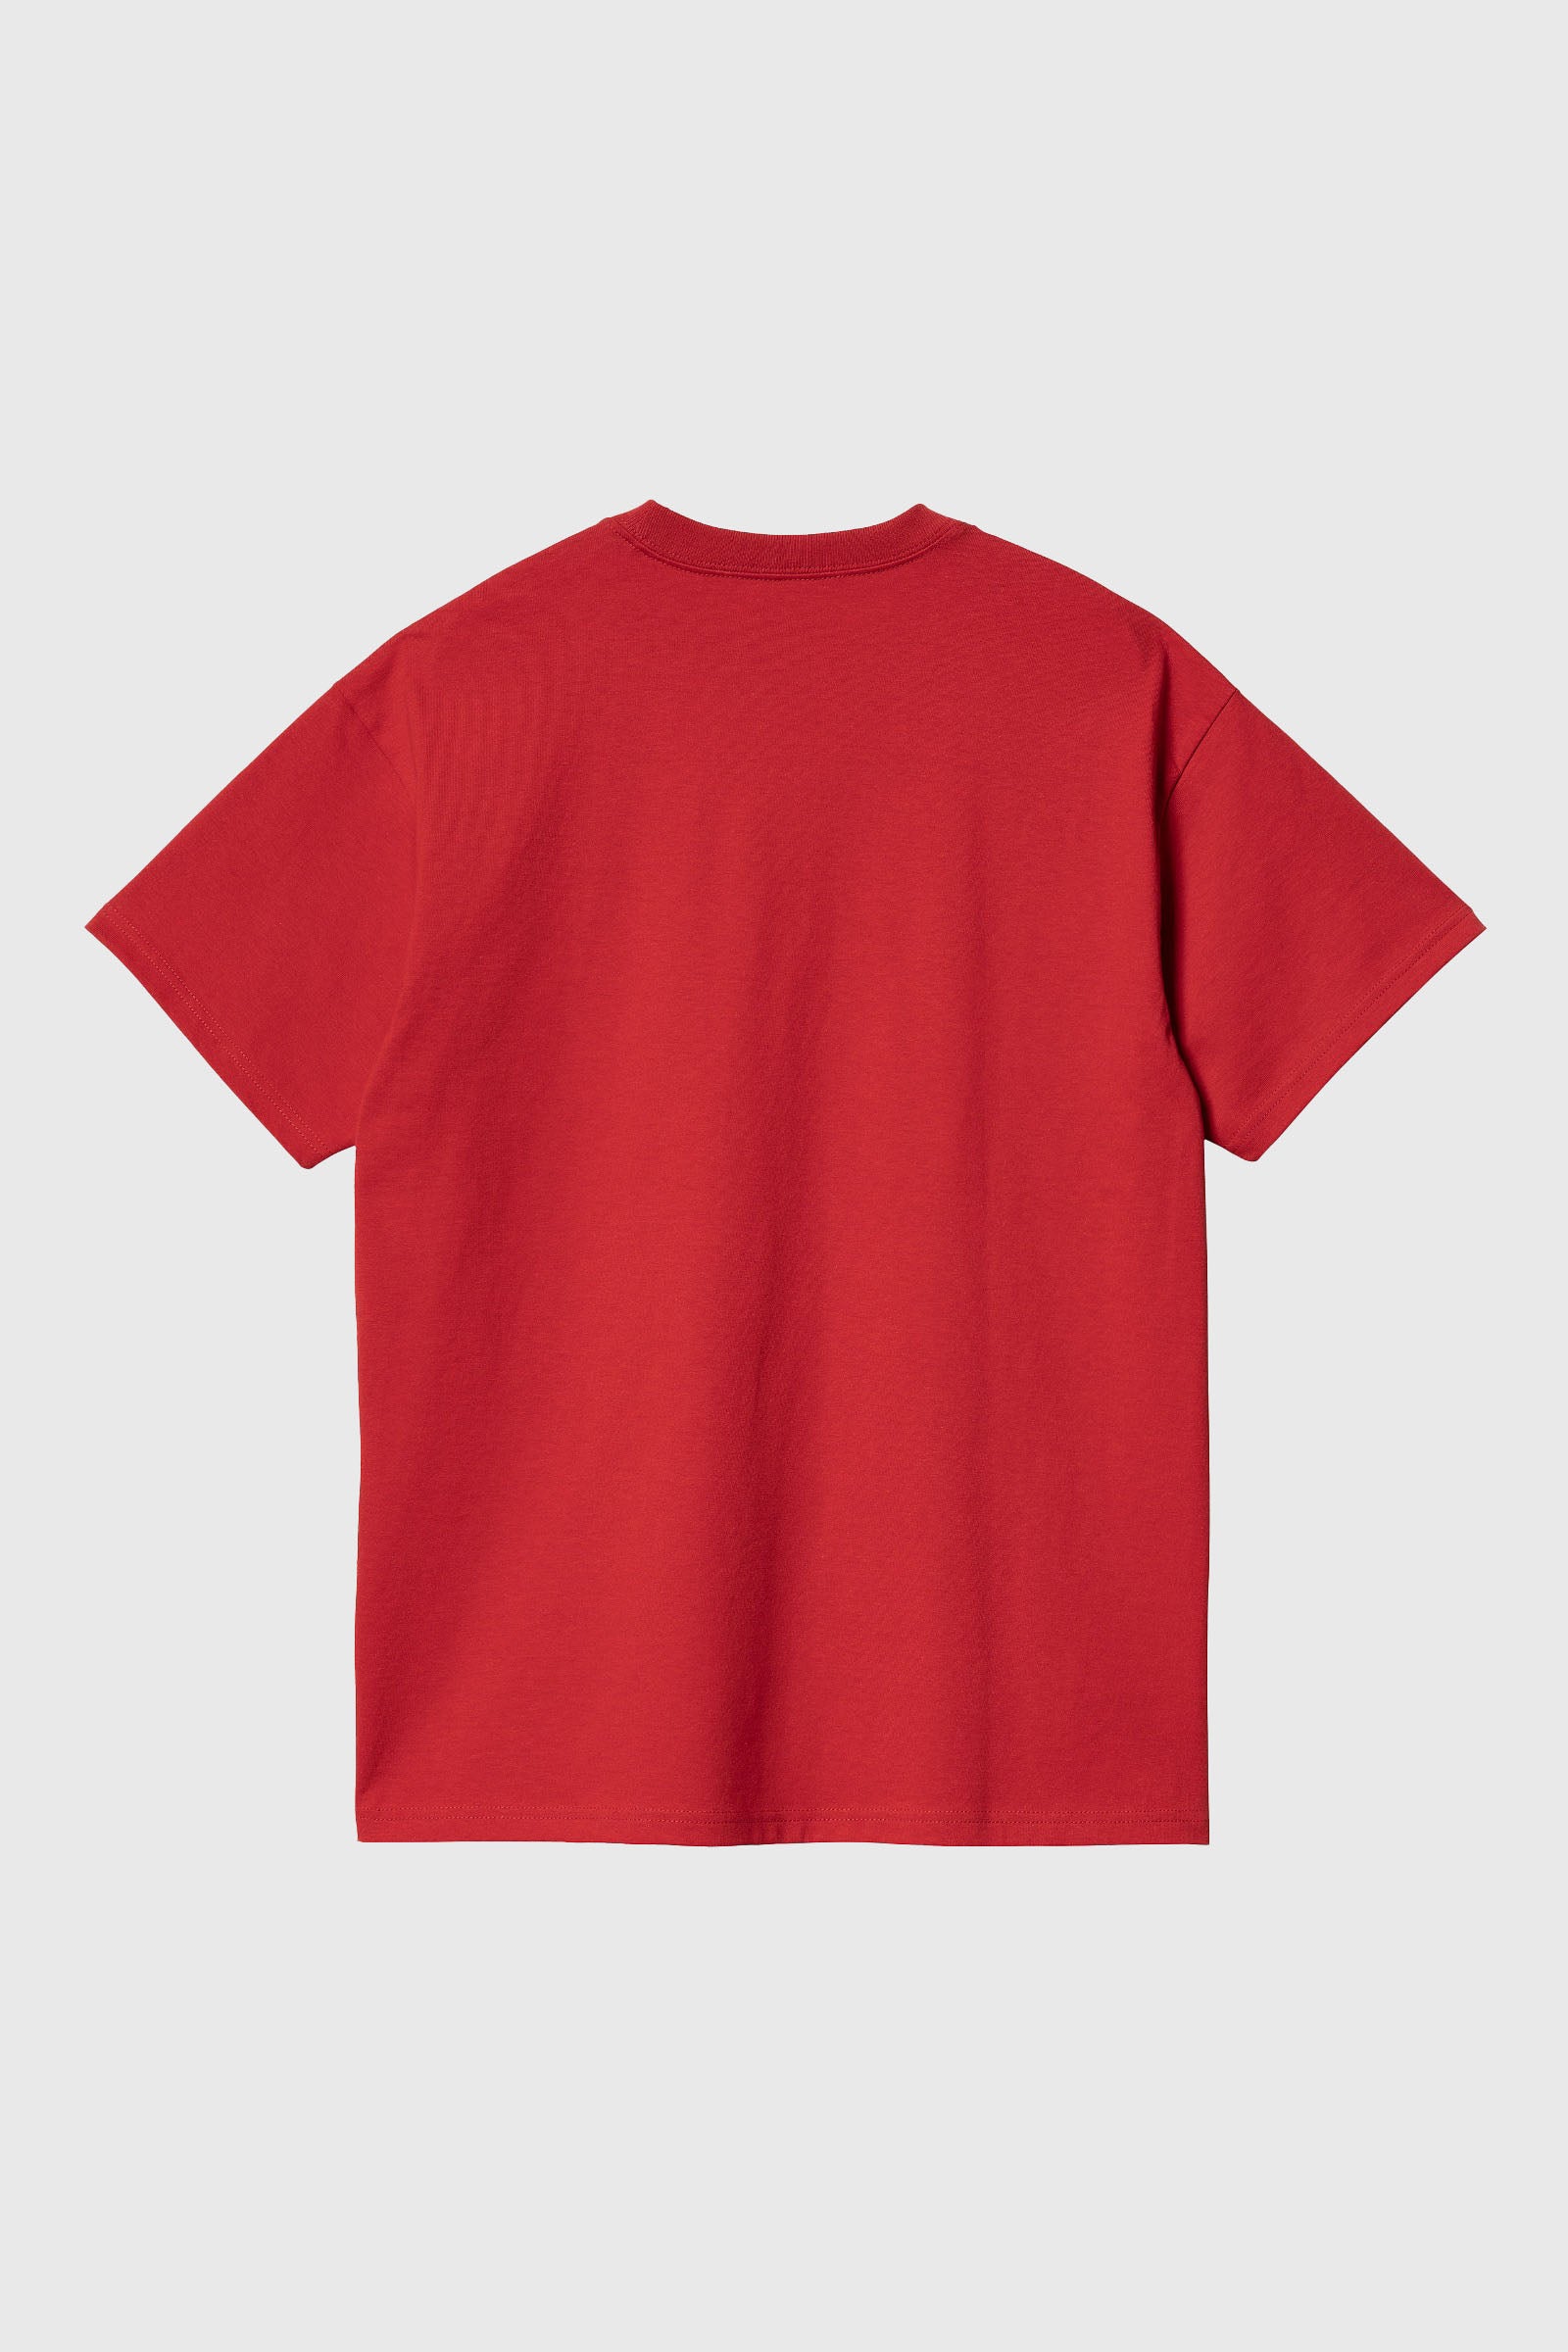 Carhartt WIP T-Shirt S/S Smart Sports Cotton Red - 4